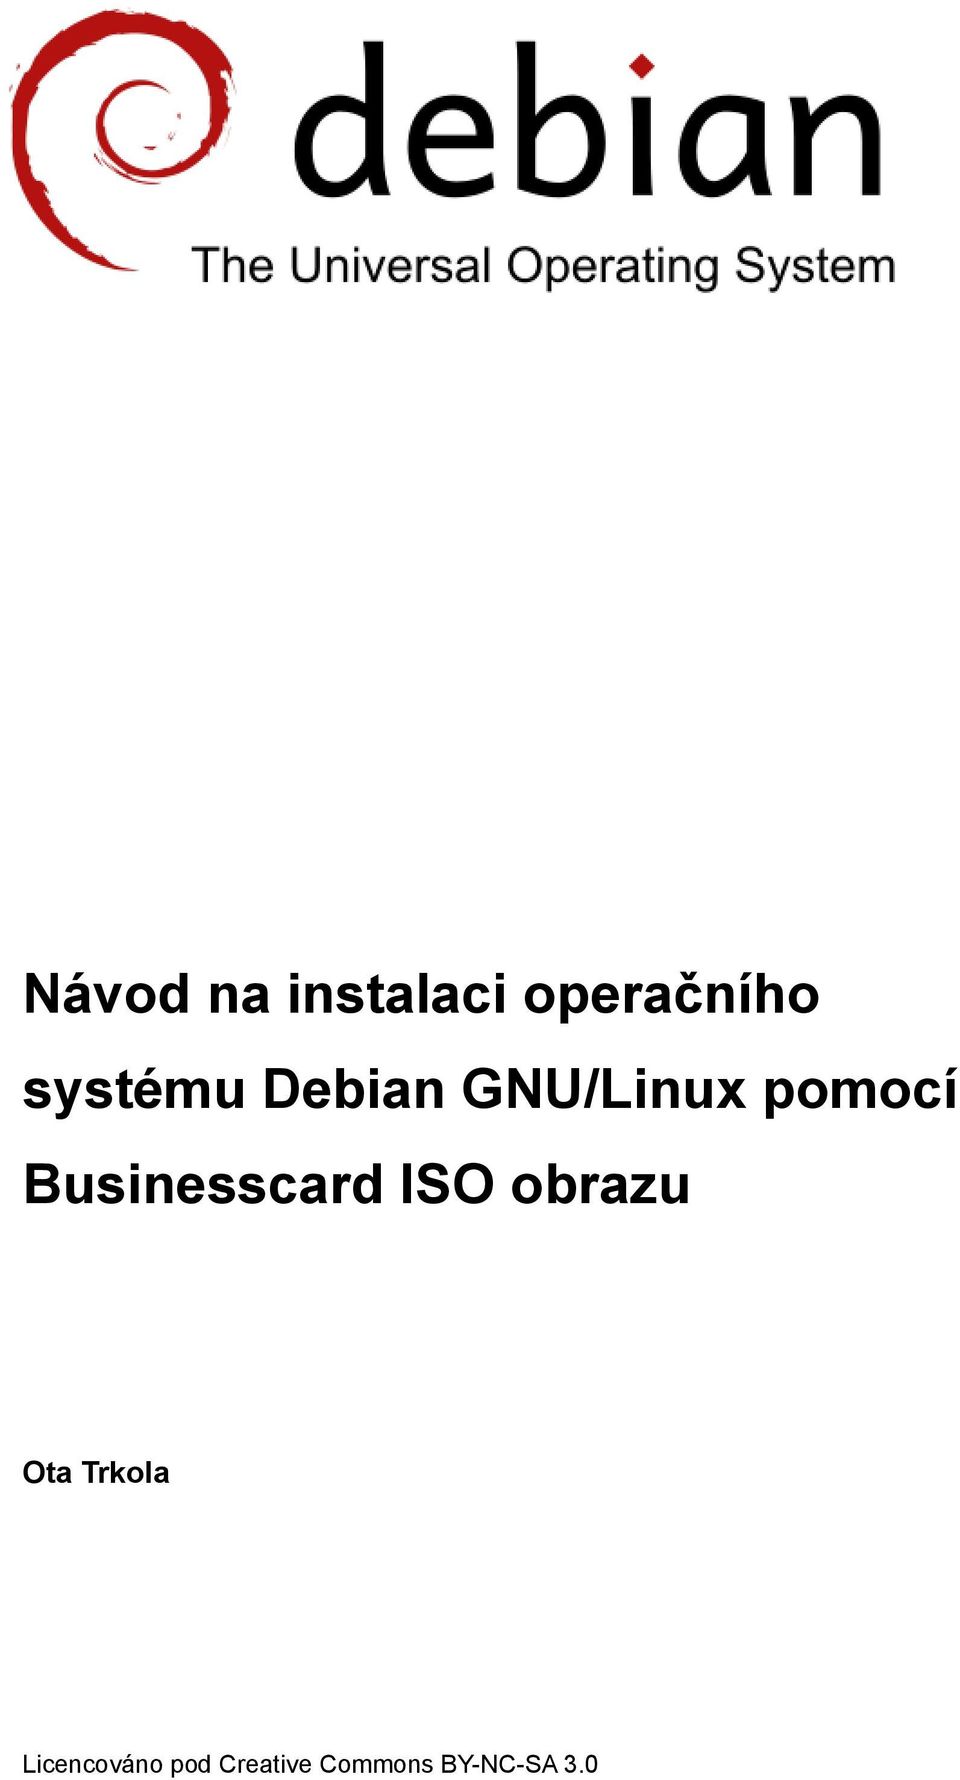 Businesscard ISO obrazu Ota Trkola